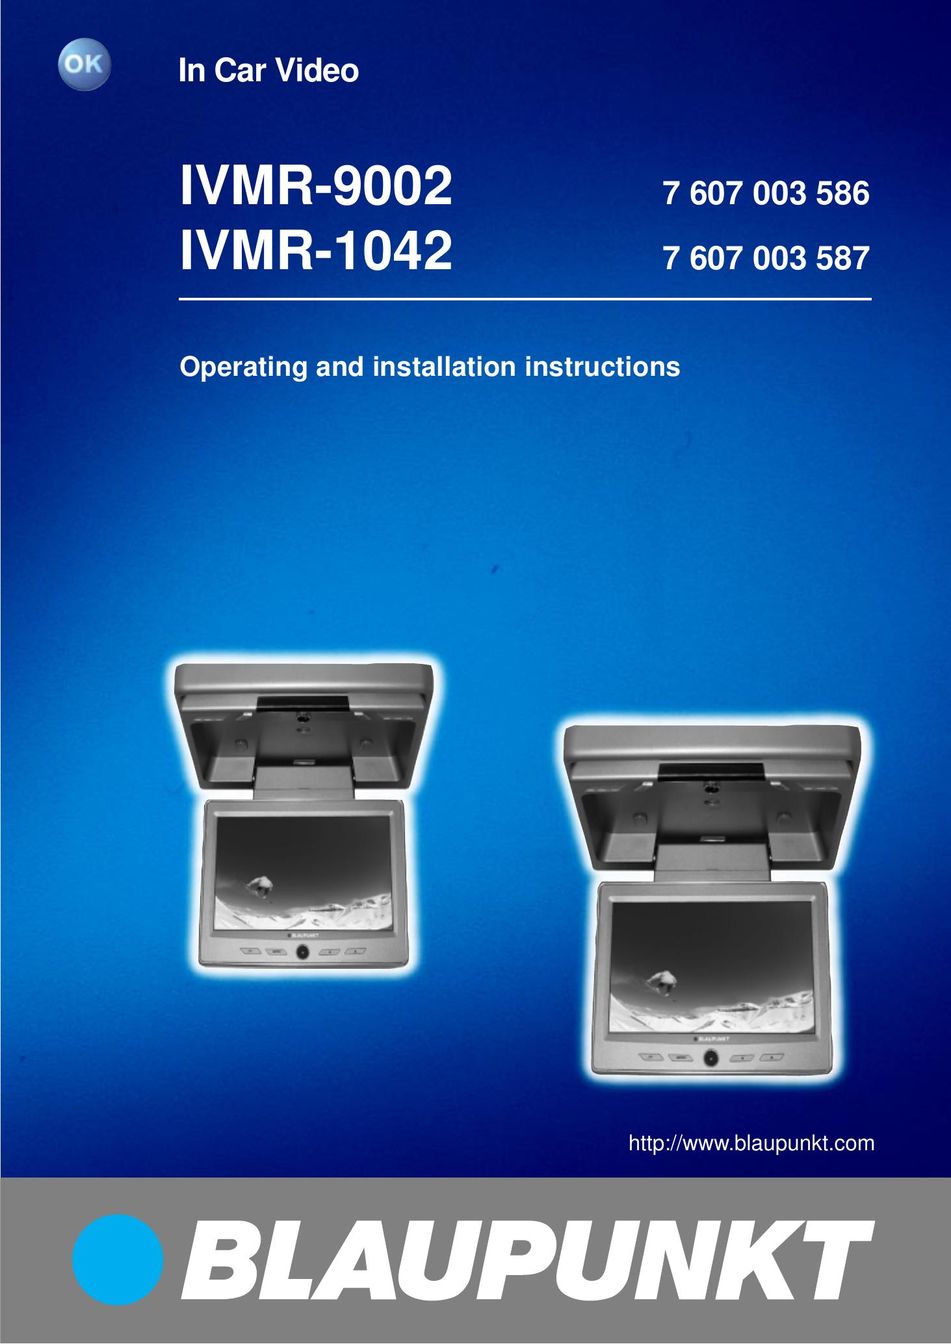 Blaupunkt IVMR-9002 Car Video System User Manual